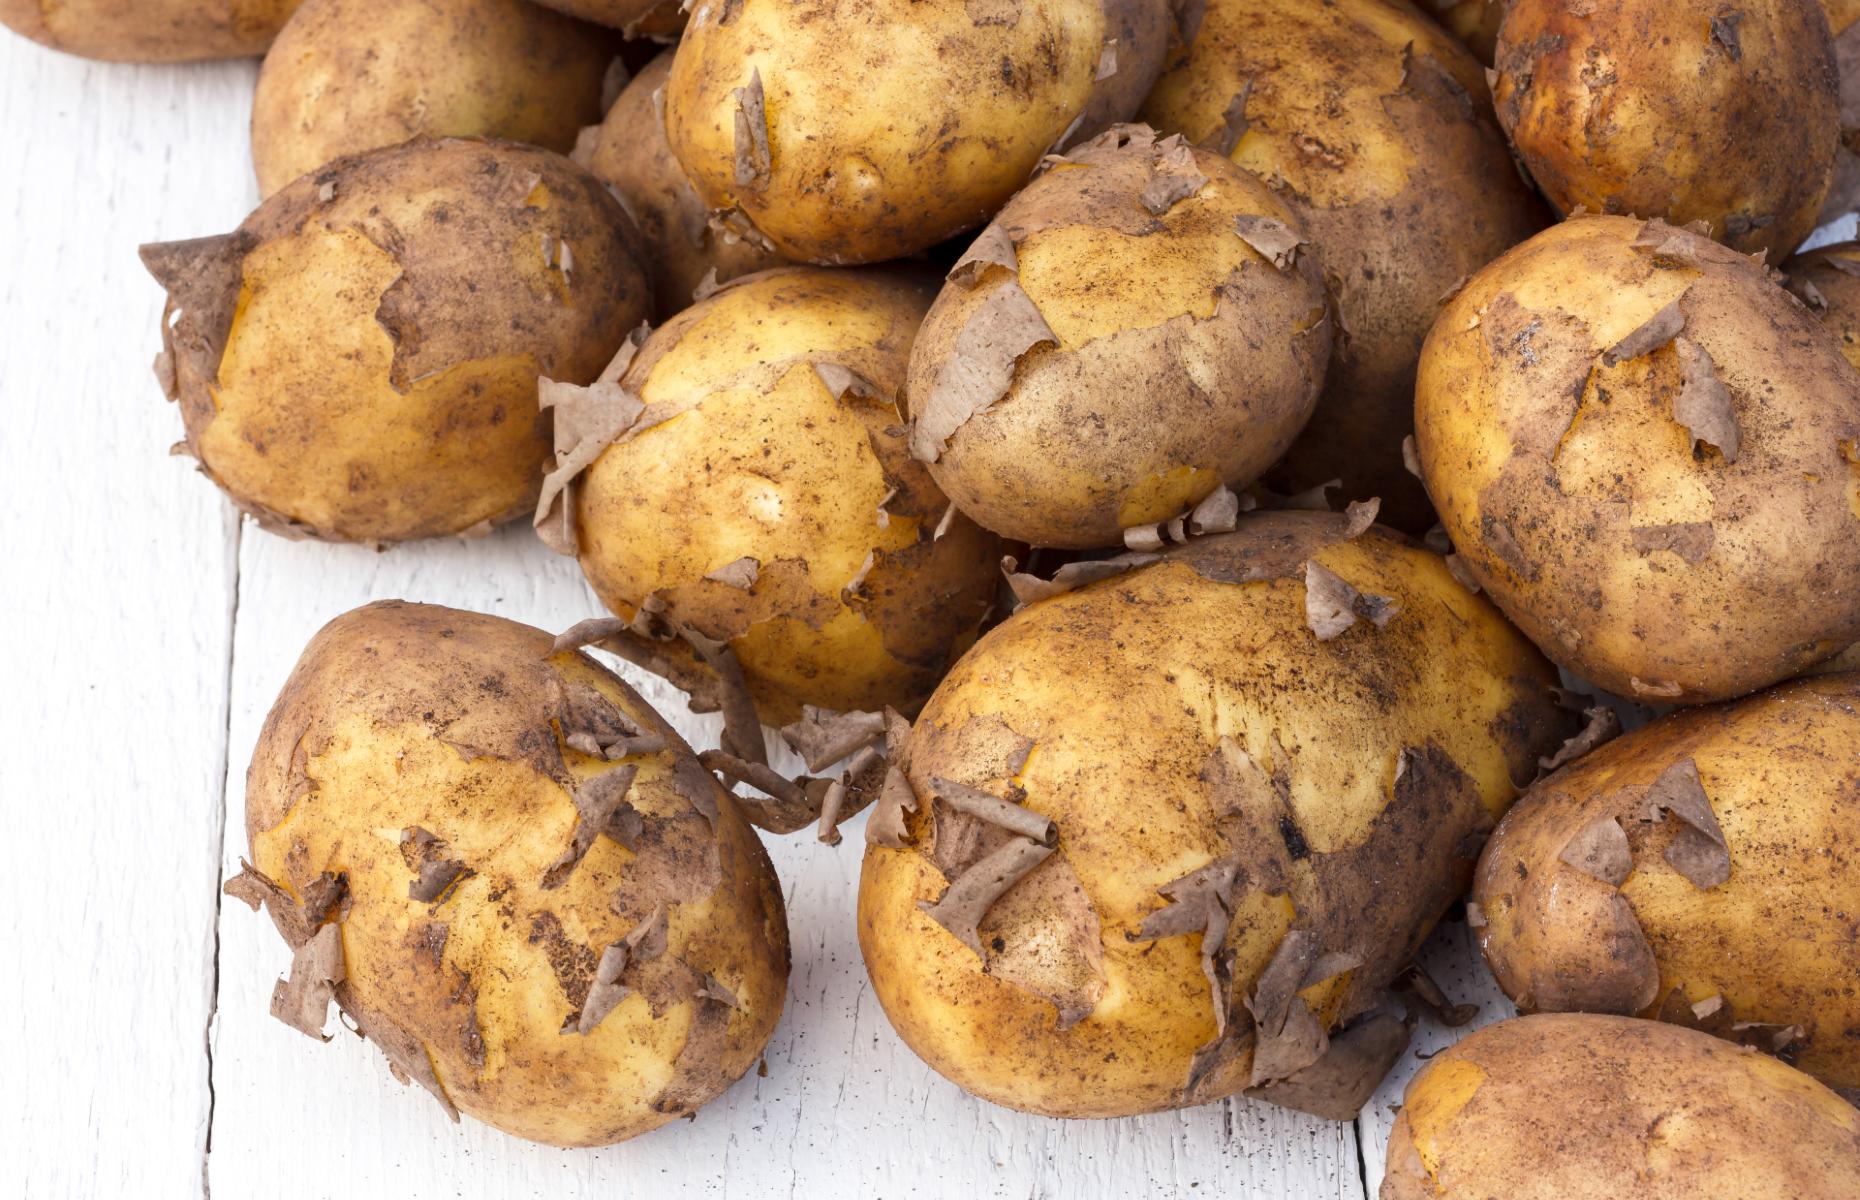 Jersey Royal Potatoes: In Season And Amazing - FriFran